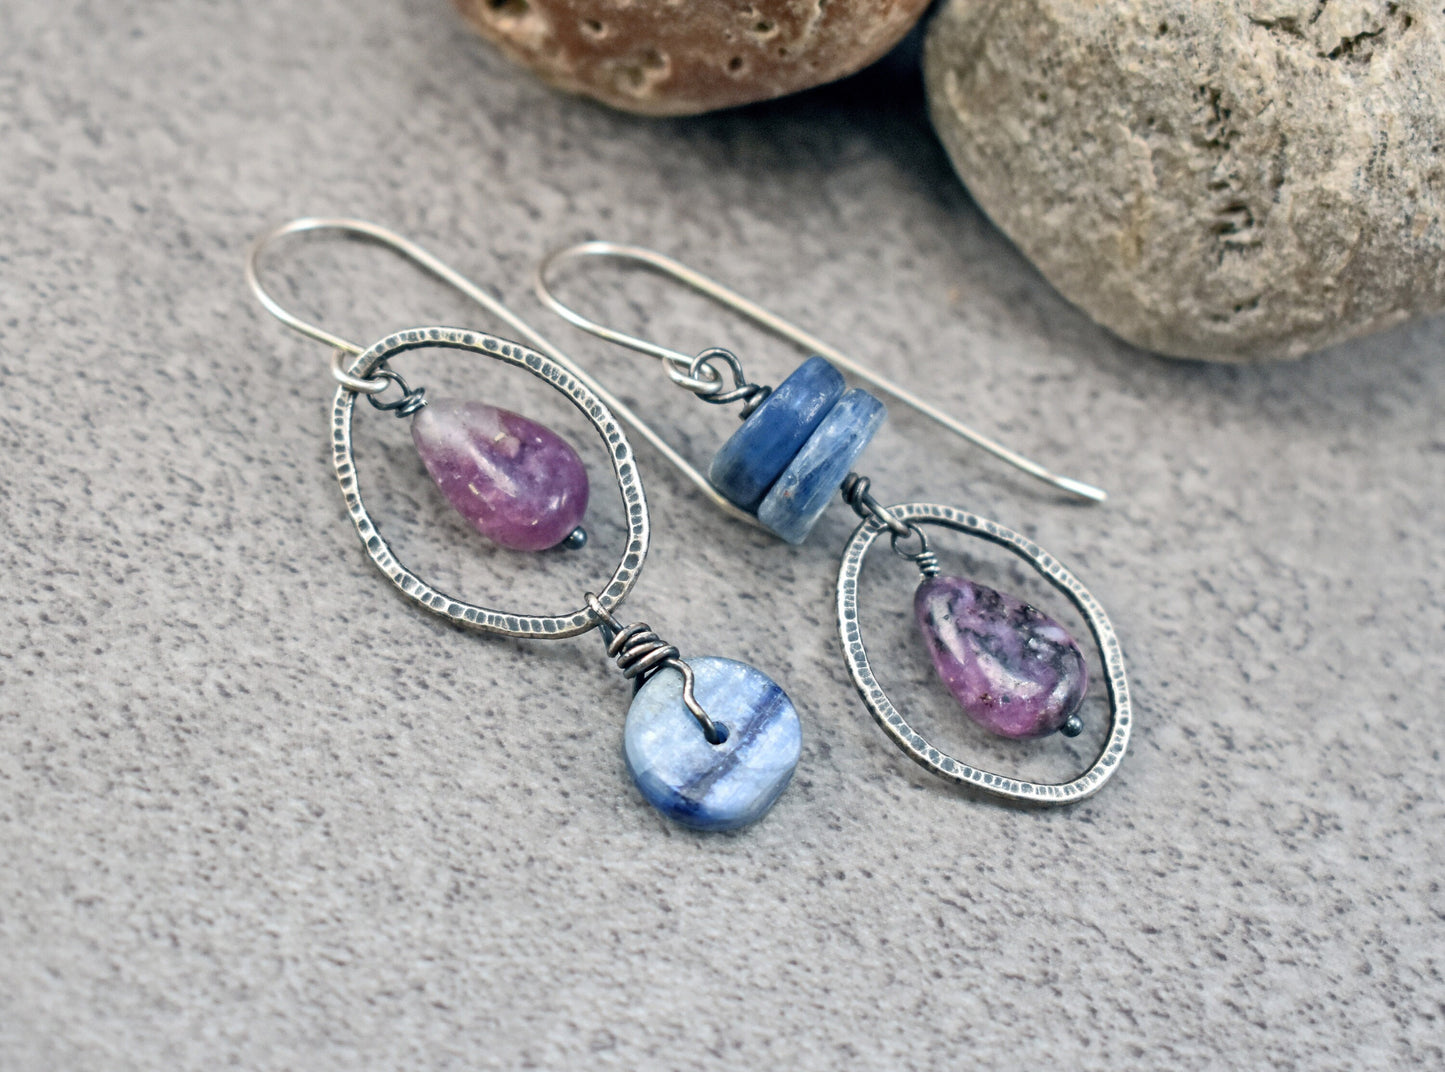 Asymmetrical Gemstone Earrings Sterling Silver, Kyanite Charoite Jewelry, Oval Blue Purple Stone Dangles, Rustic Wire, Artisan Unique